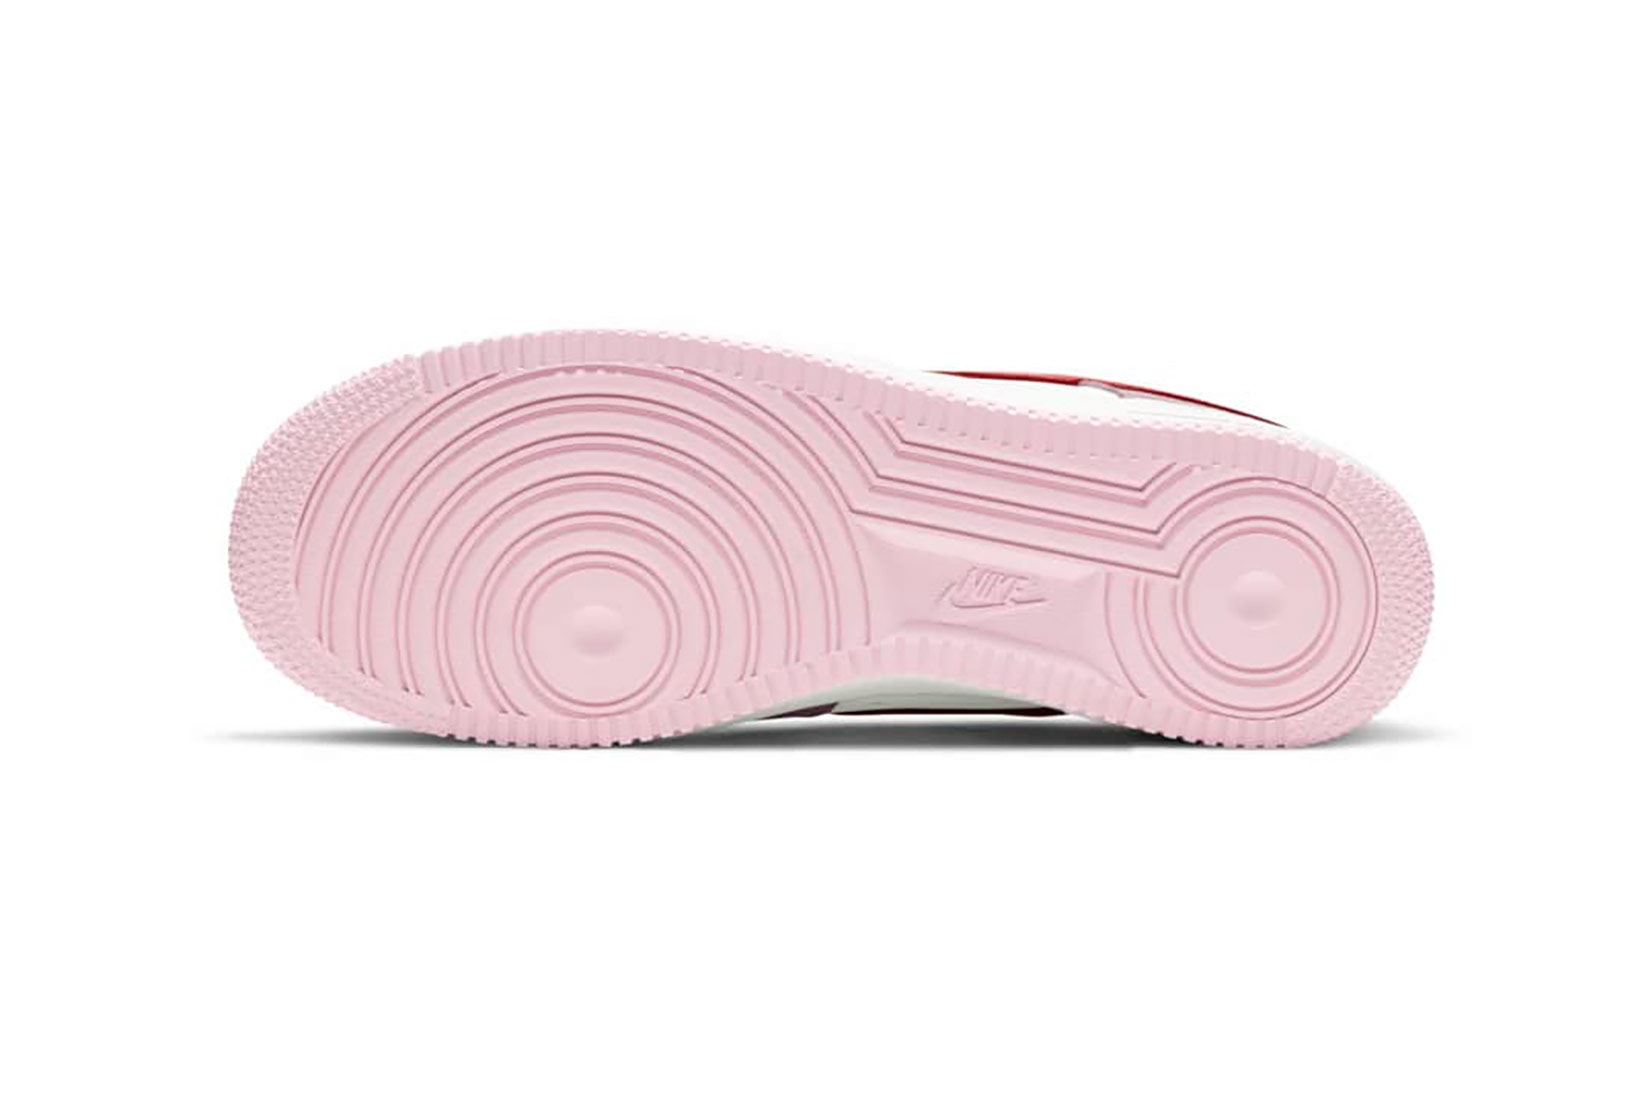 nike air force 1 af1 07 valentines day sneakers pink red white shoes footwear kicks sneakerhead sole